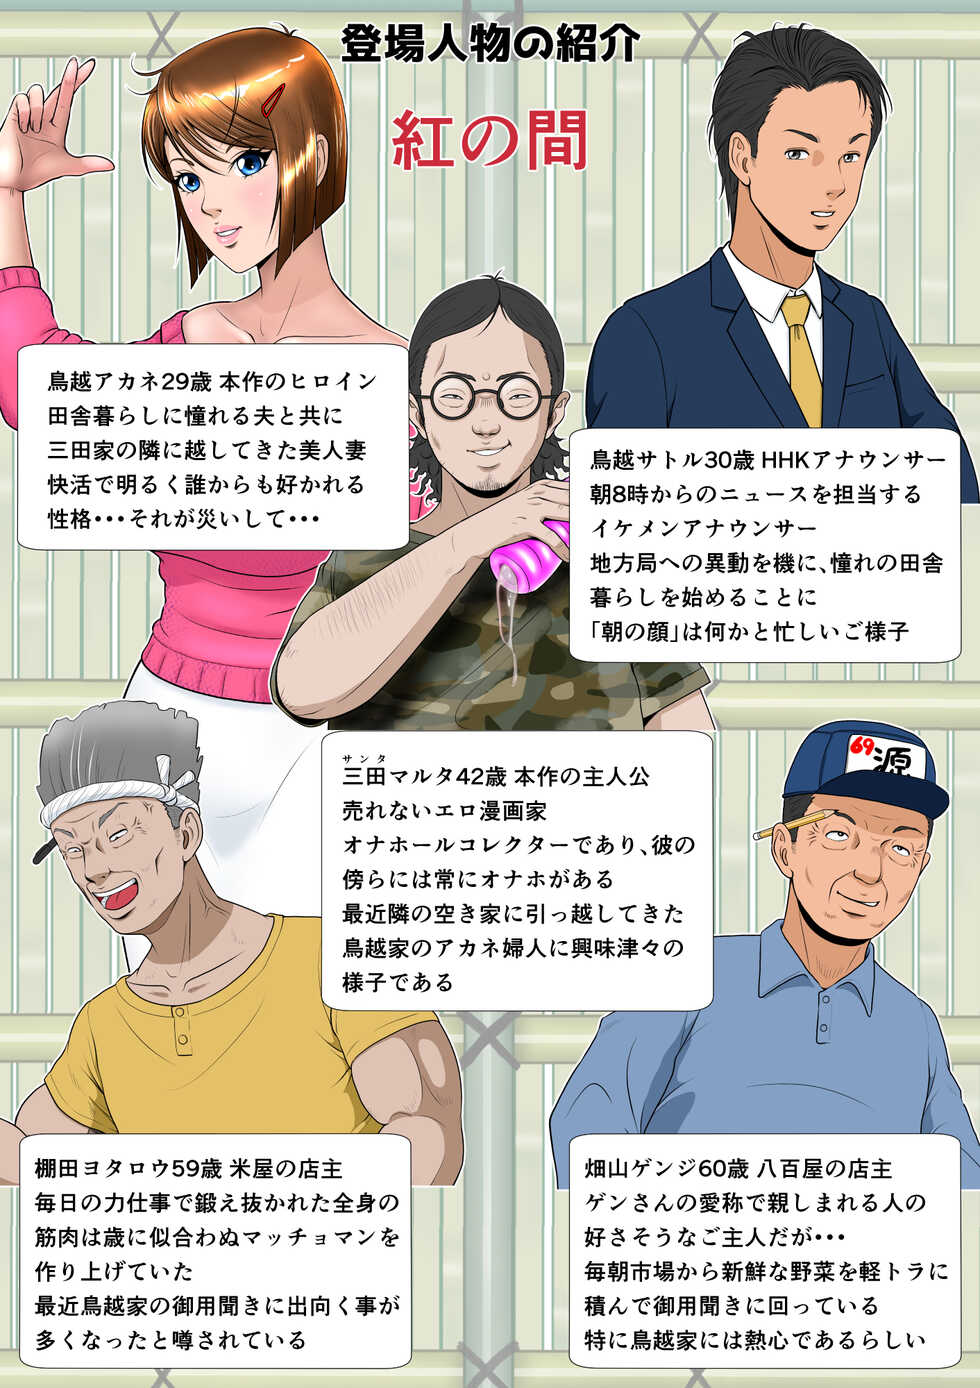 [NTR System] Kakine Tsuma II Episode 2 - Page 2